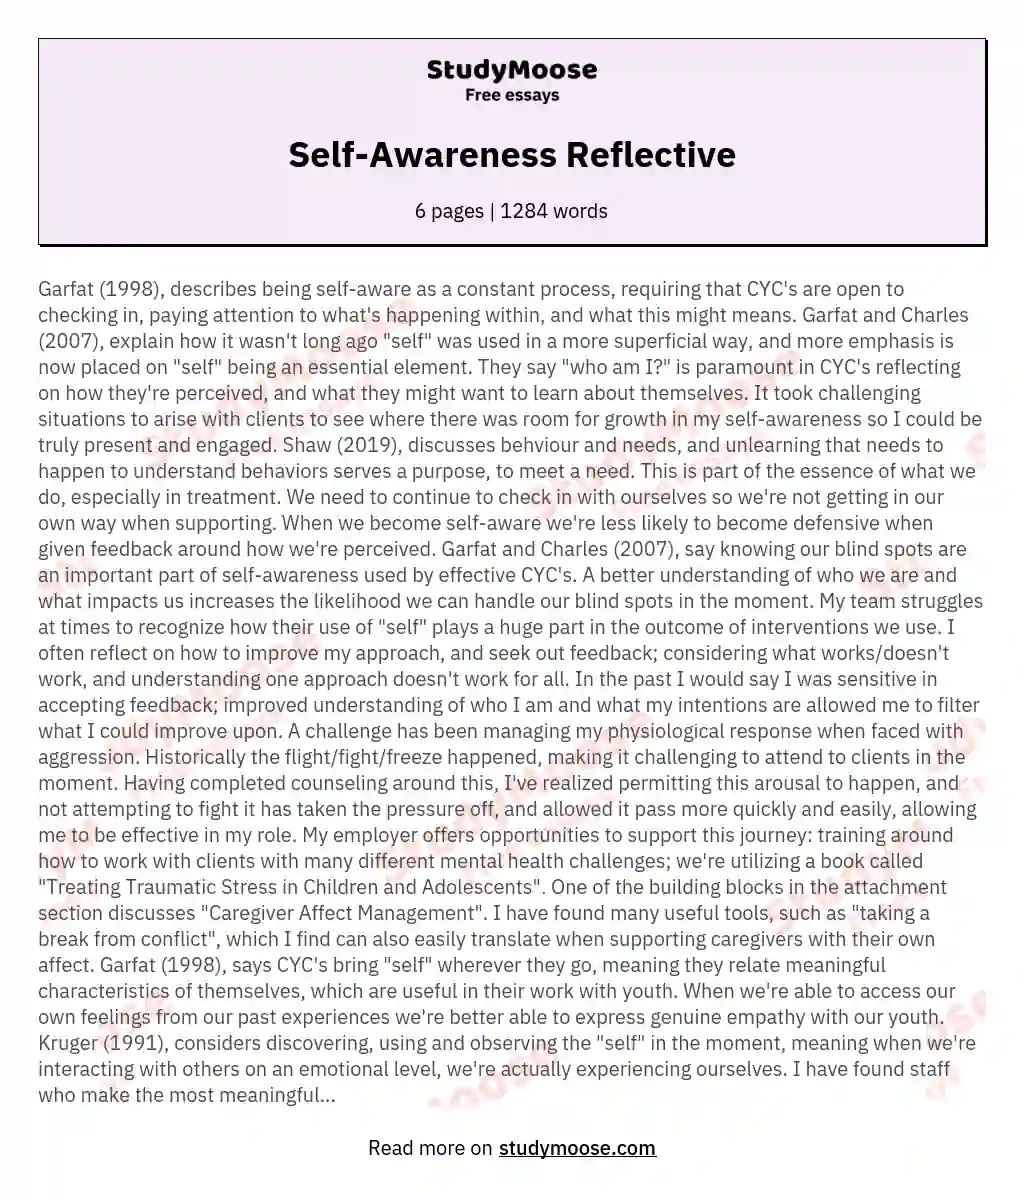 Self-Awareness Reflective